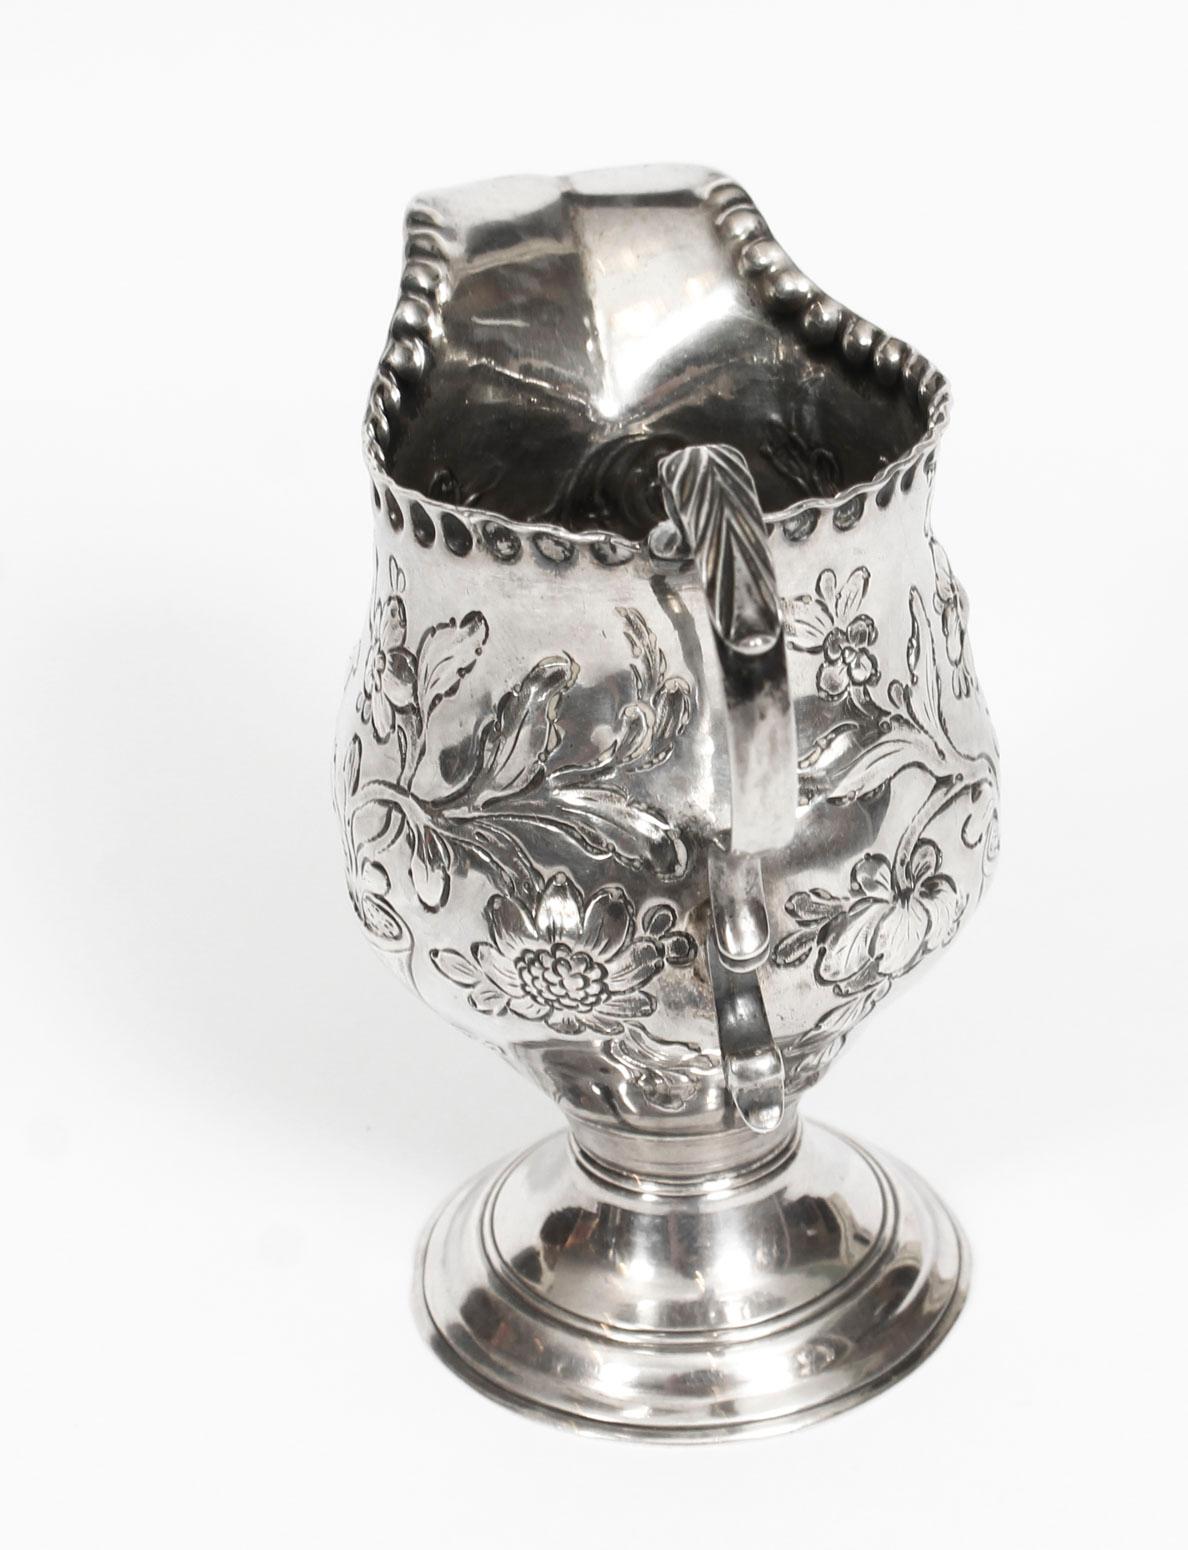 Antique English George III Sterling Silver Cream Jug 1770, 18th Century 1